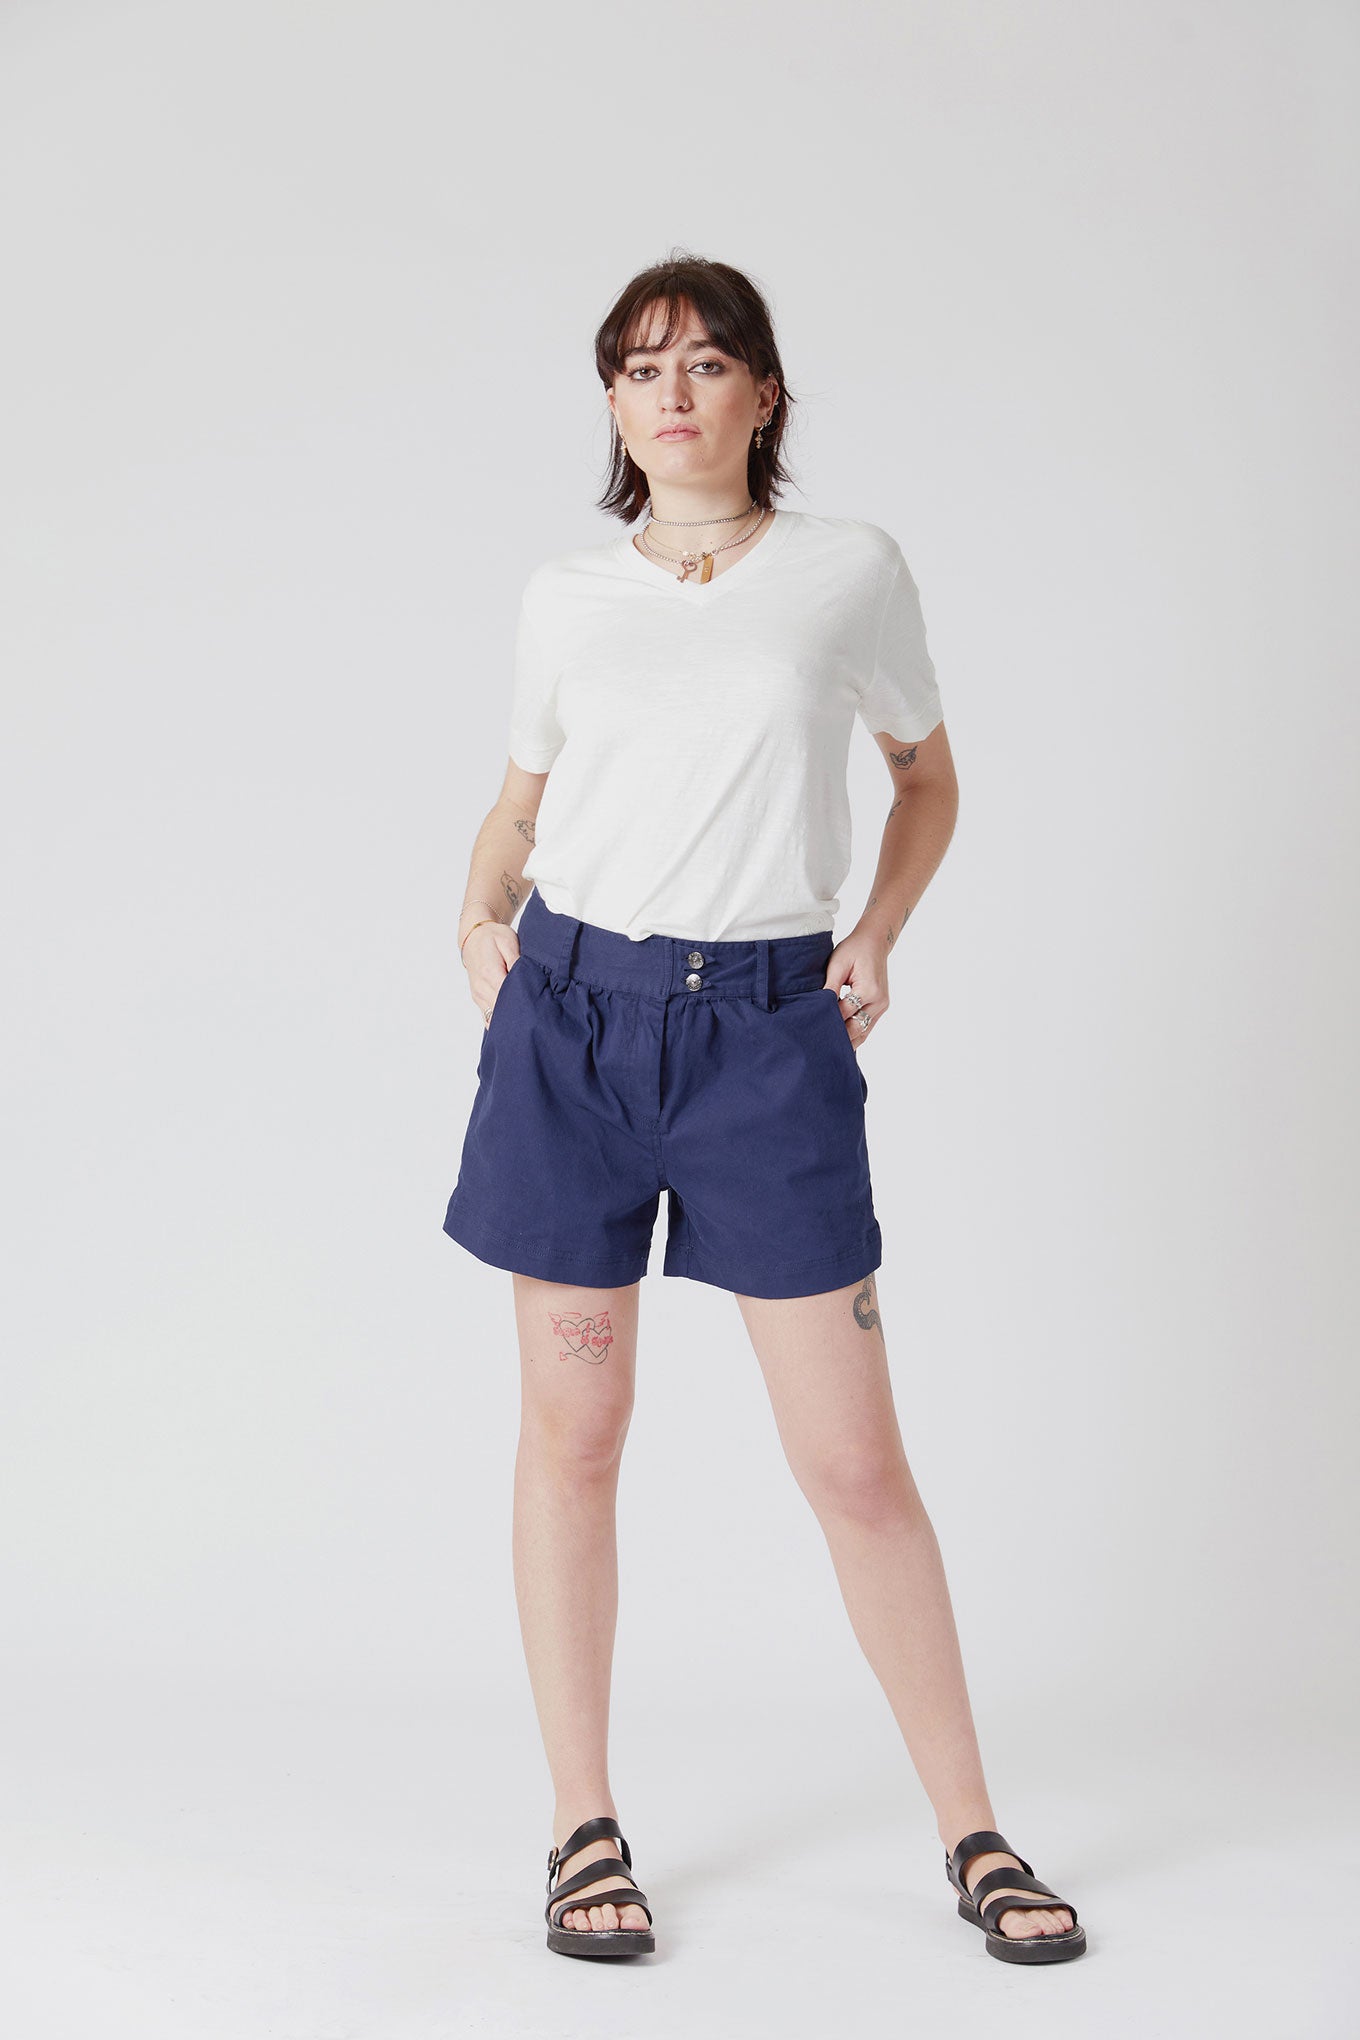 LILY Organic Cotton Shorts Navy, SIZE 5 / UK 16 / EUR 44